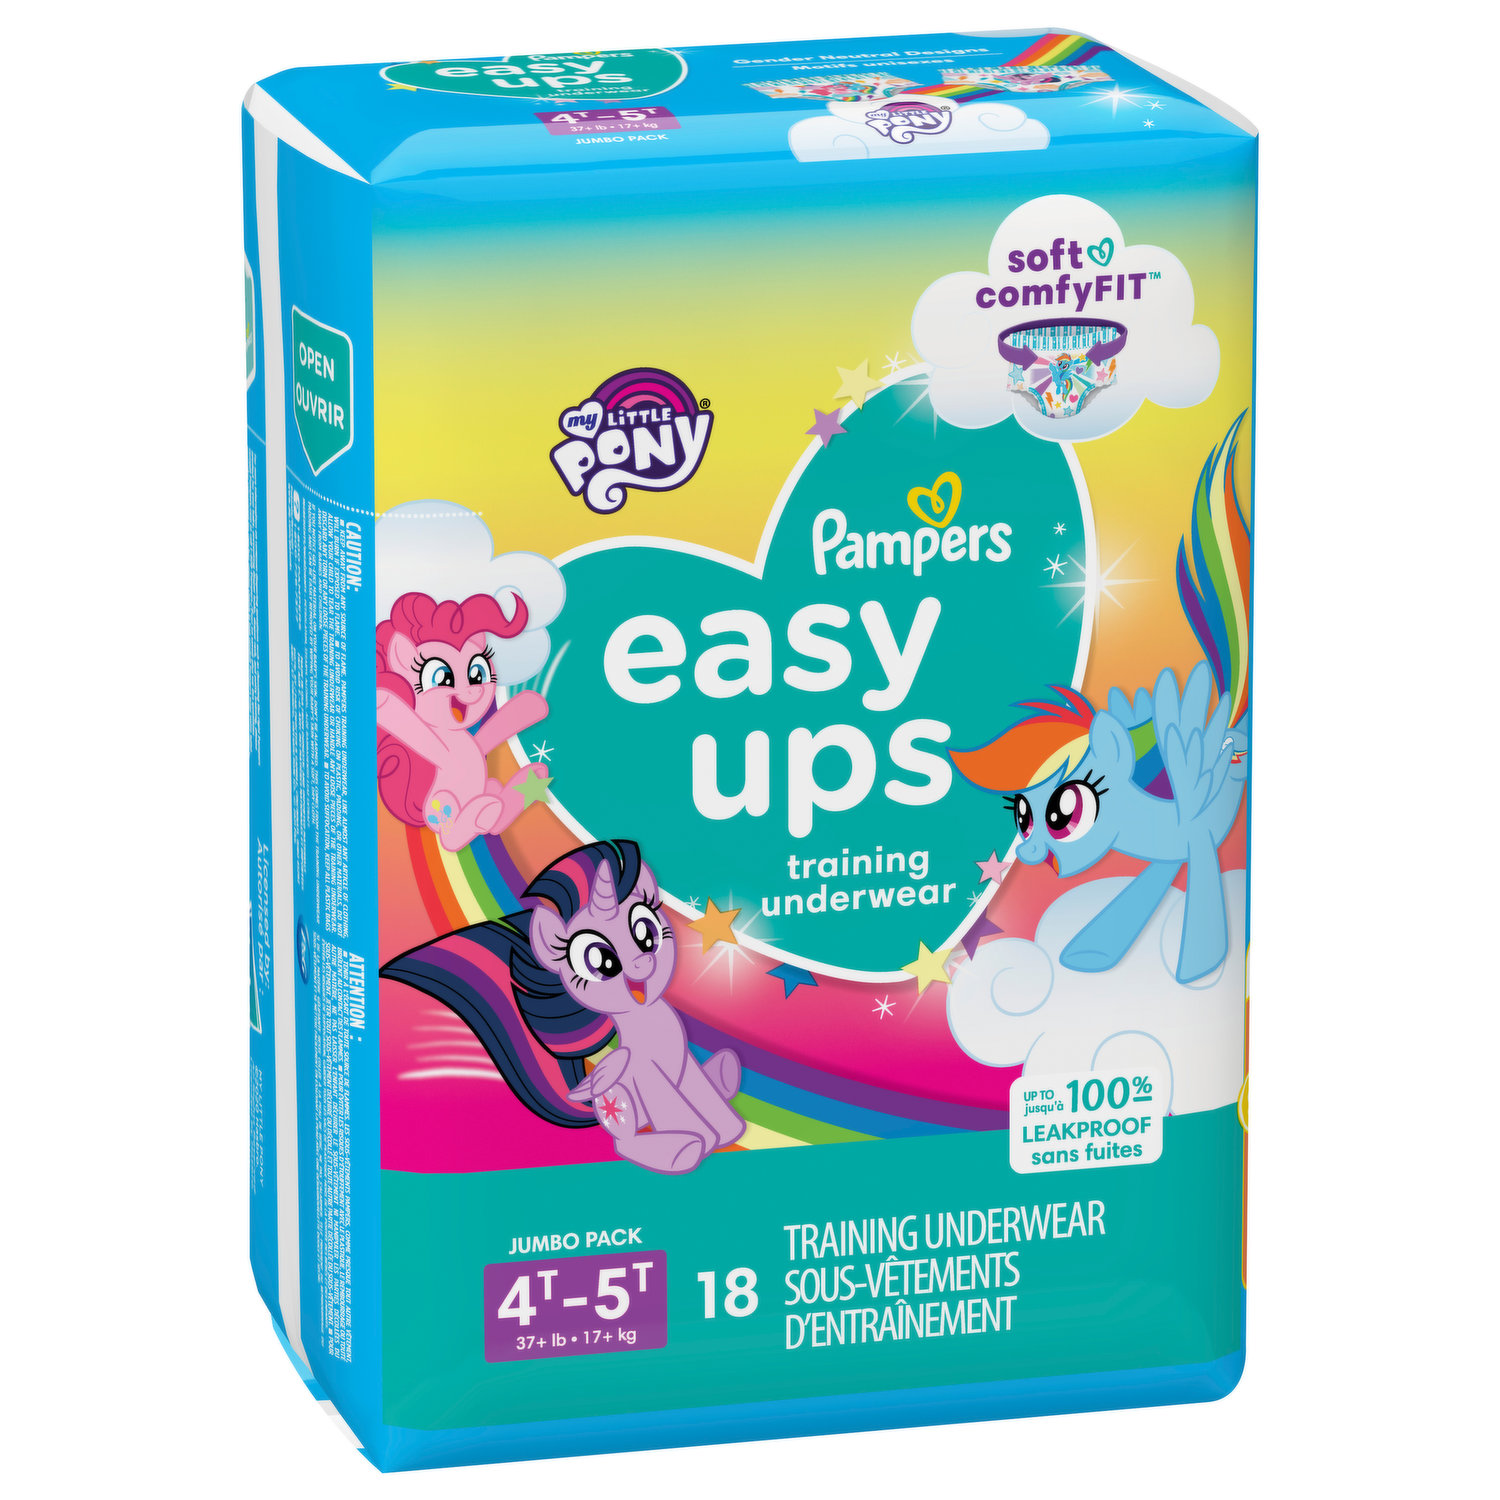  UCandy 7 Packs Potty Training Underwear for Boys,Baby Boy Training  Pants Organic Cotton,Toilet Training Underpants for Boys 2T : Baby